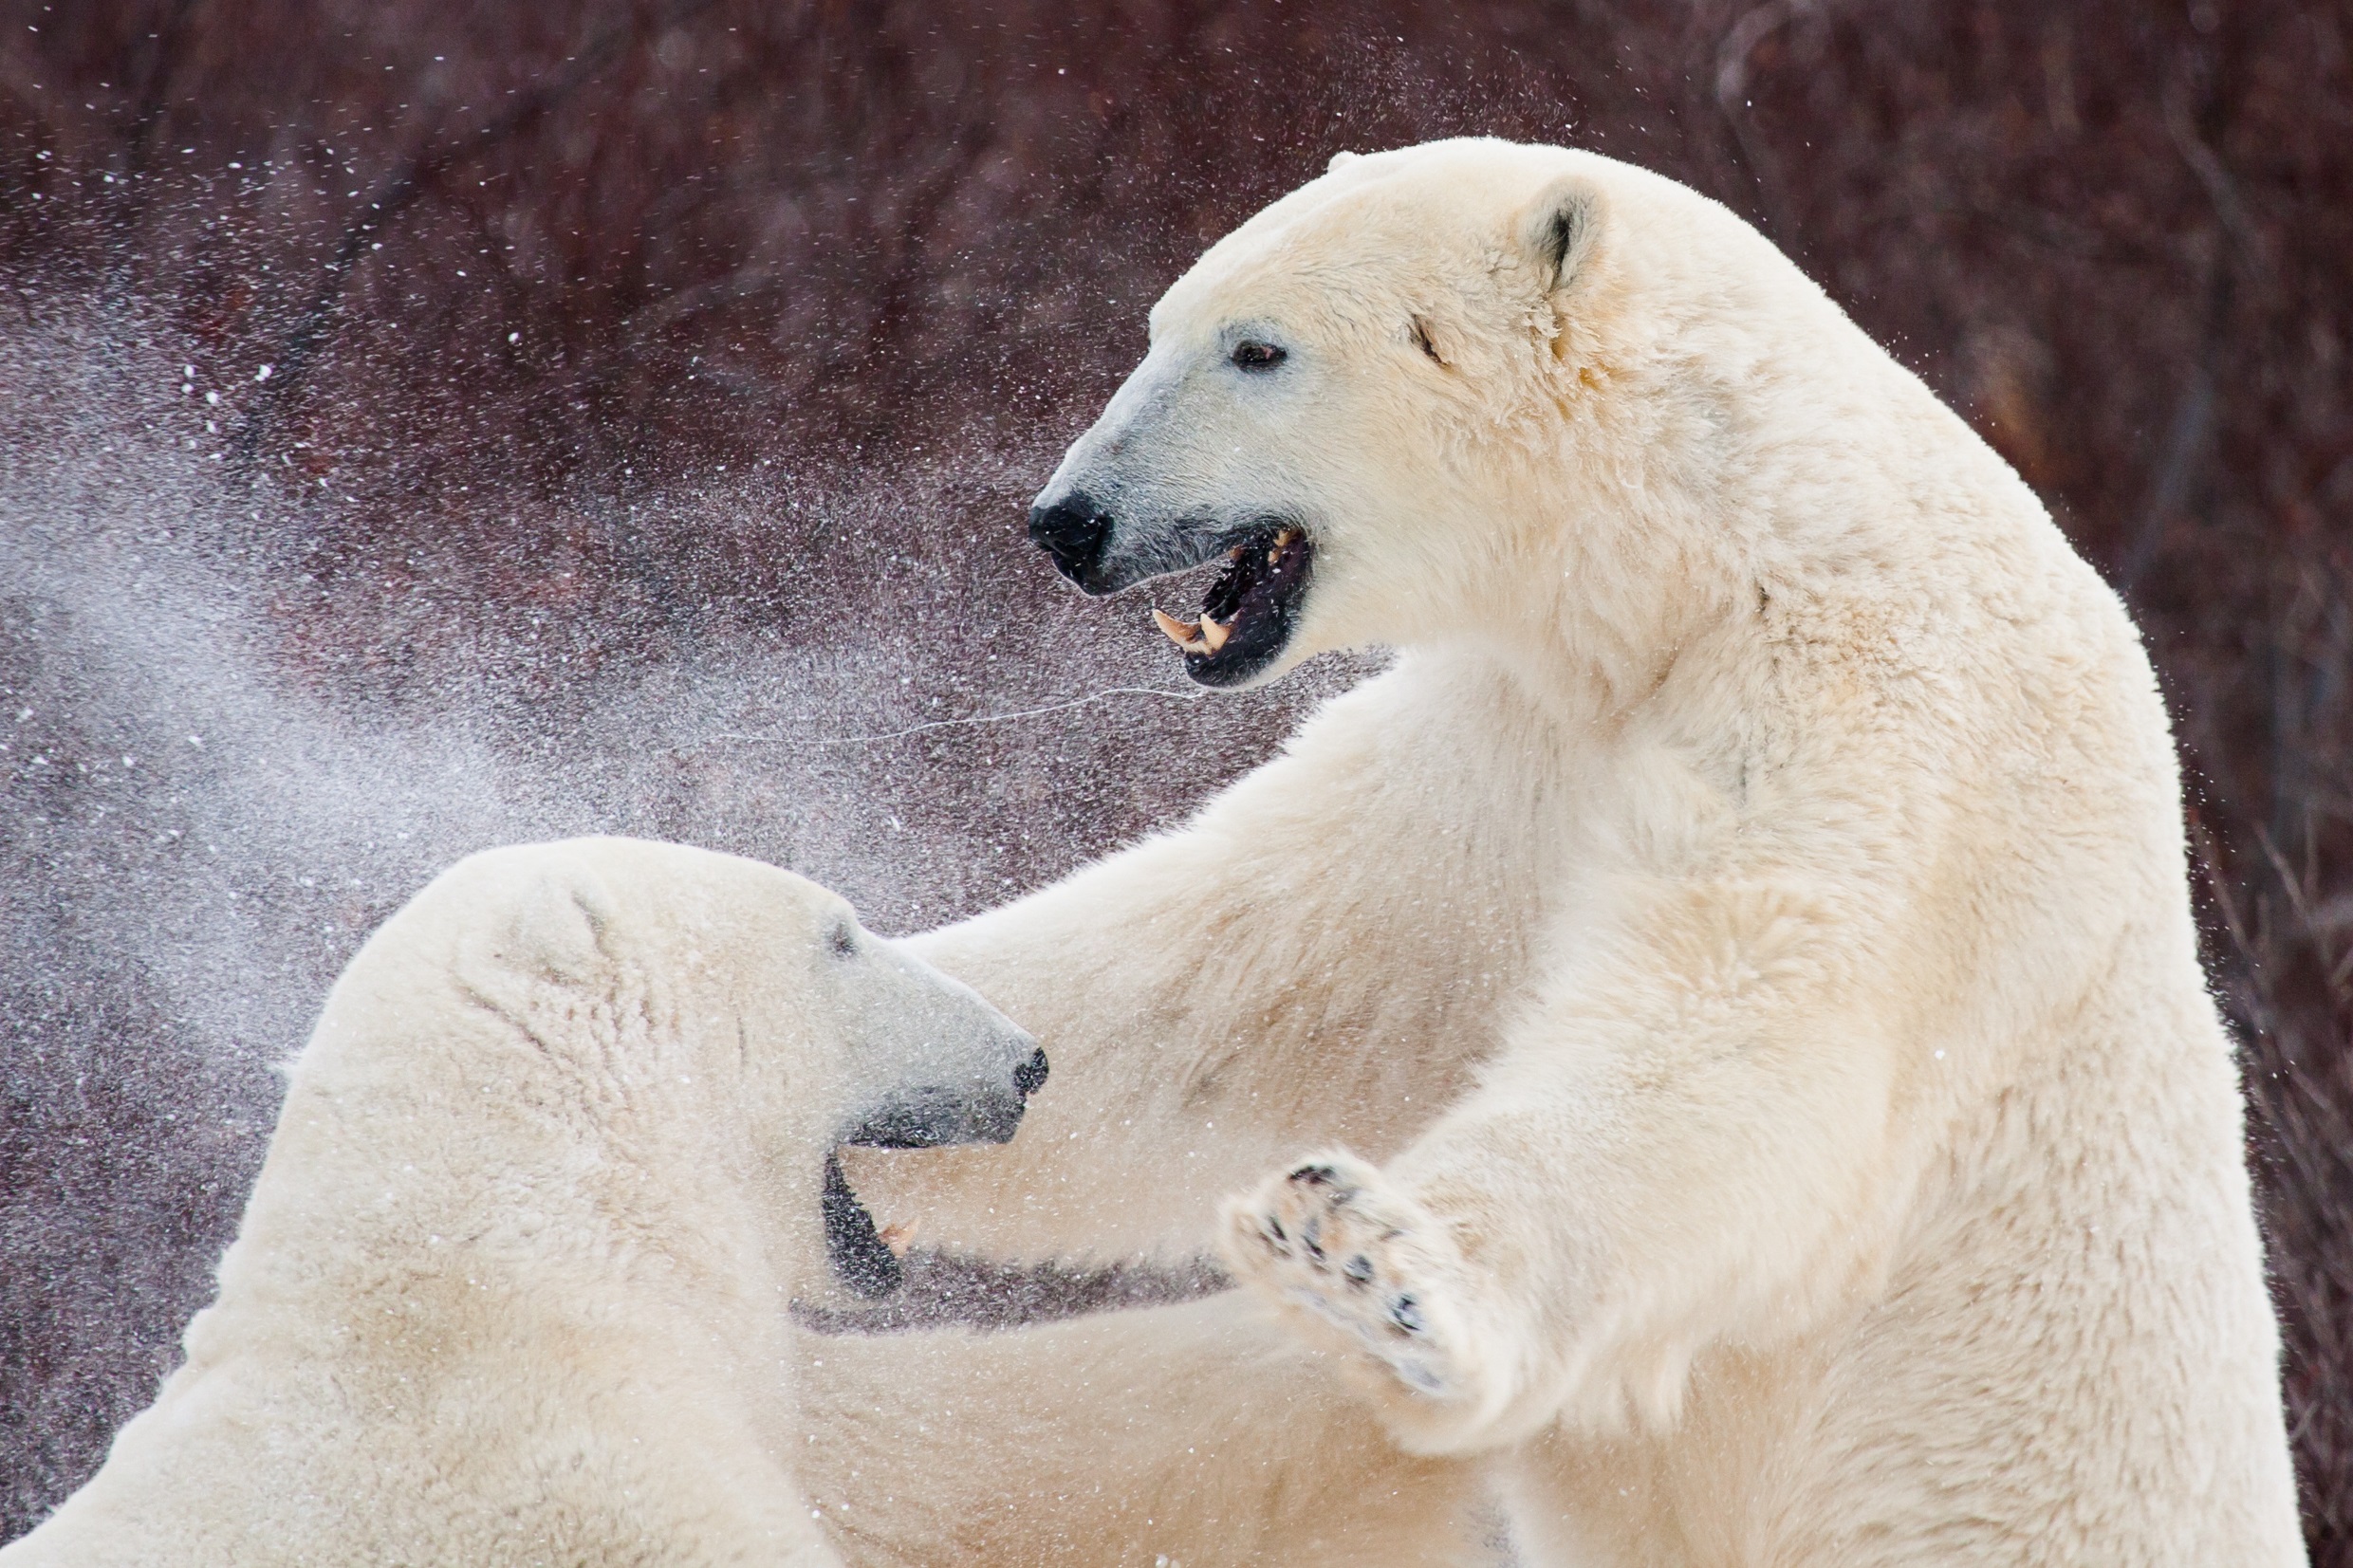 Two large polar bears fighting